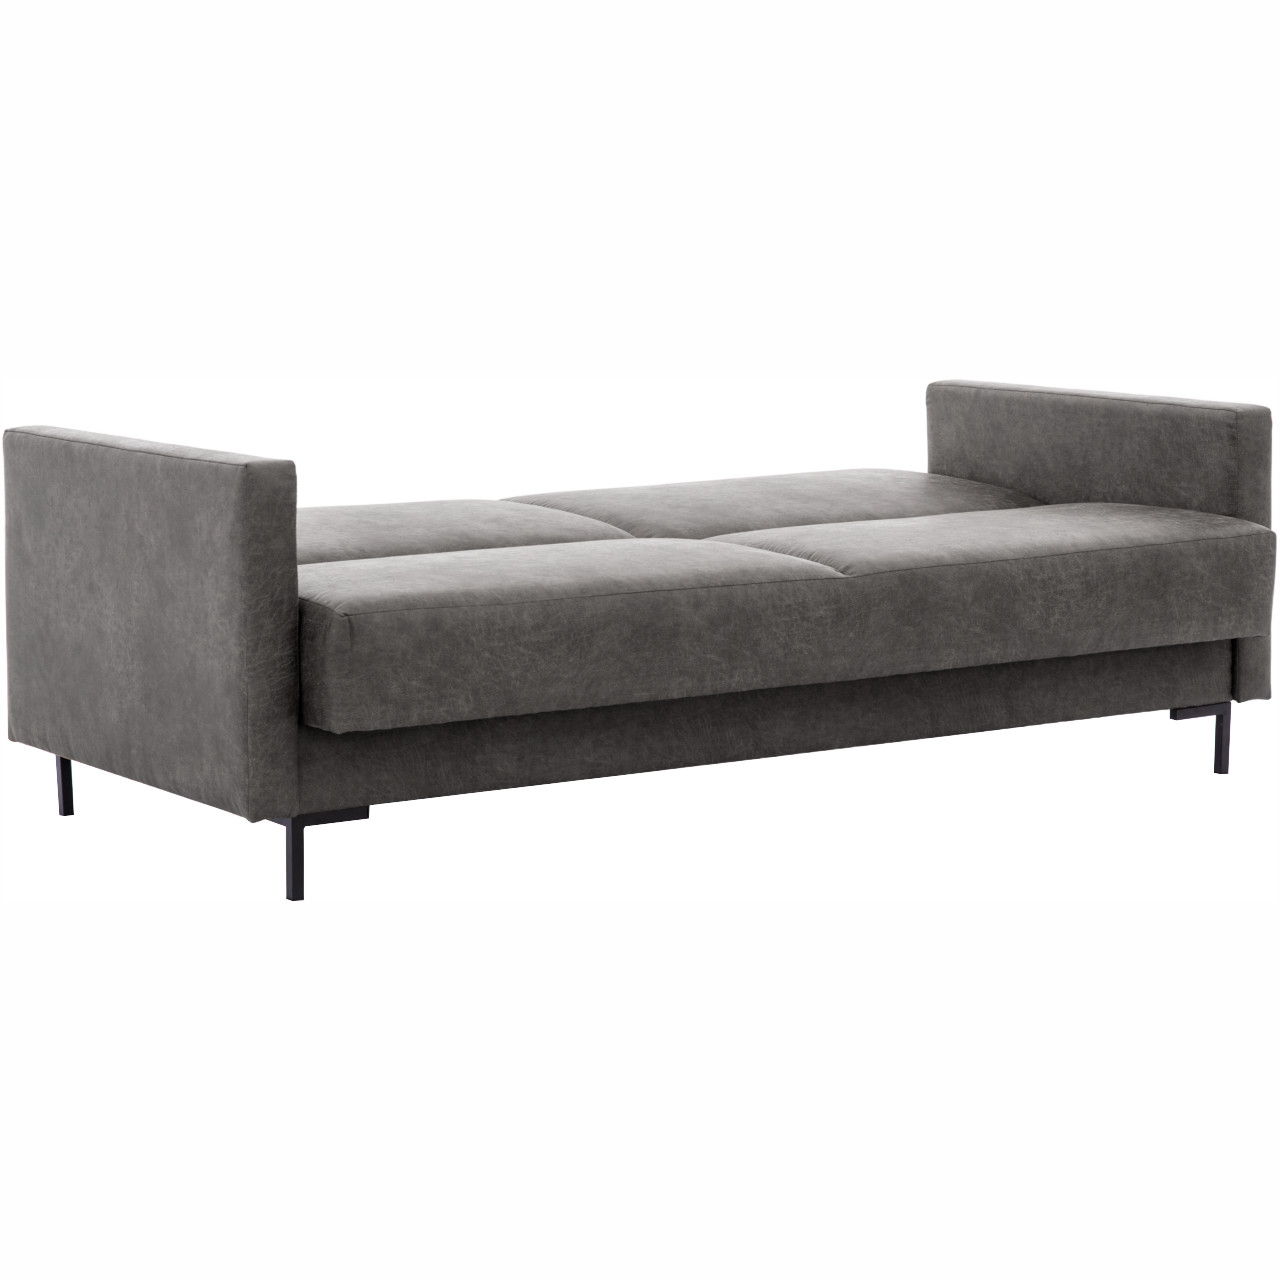 Sofa SOLVO A madone 17047 black